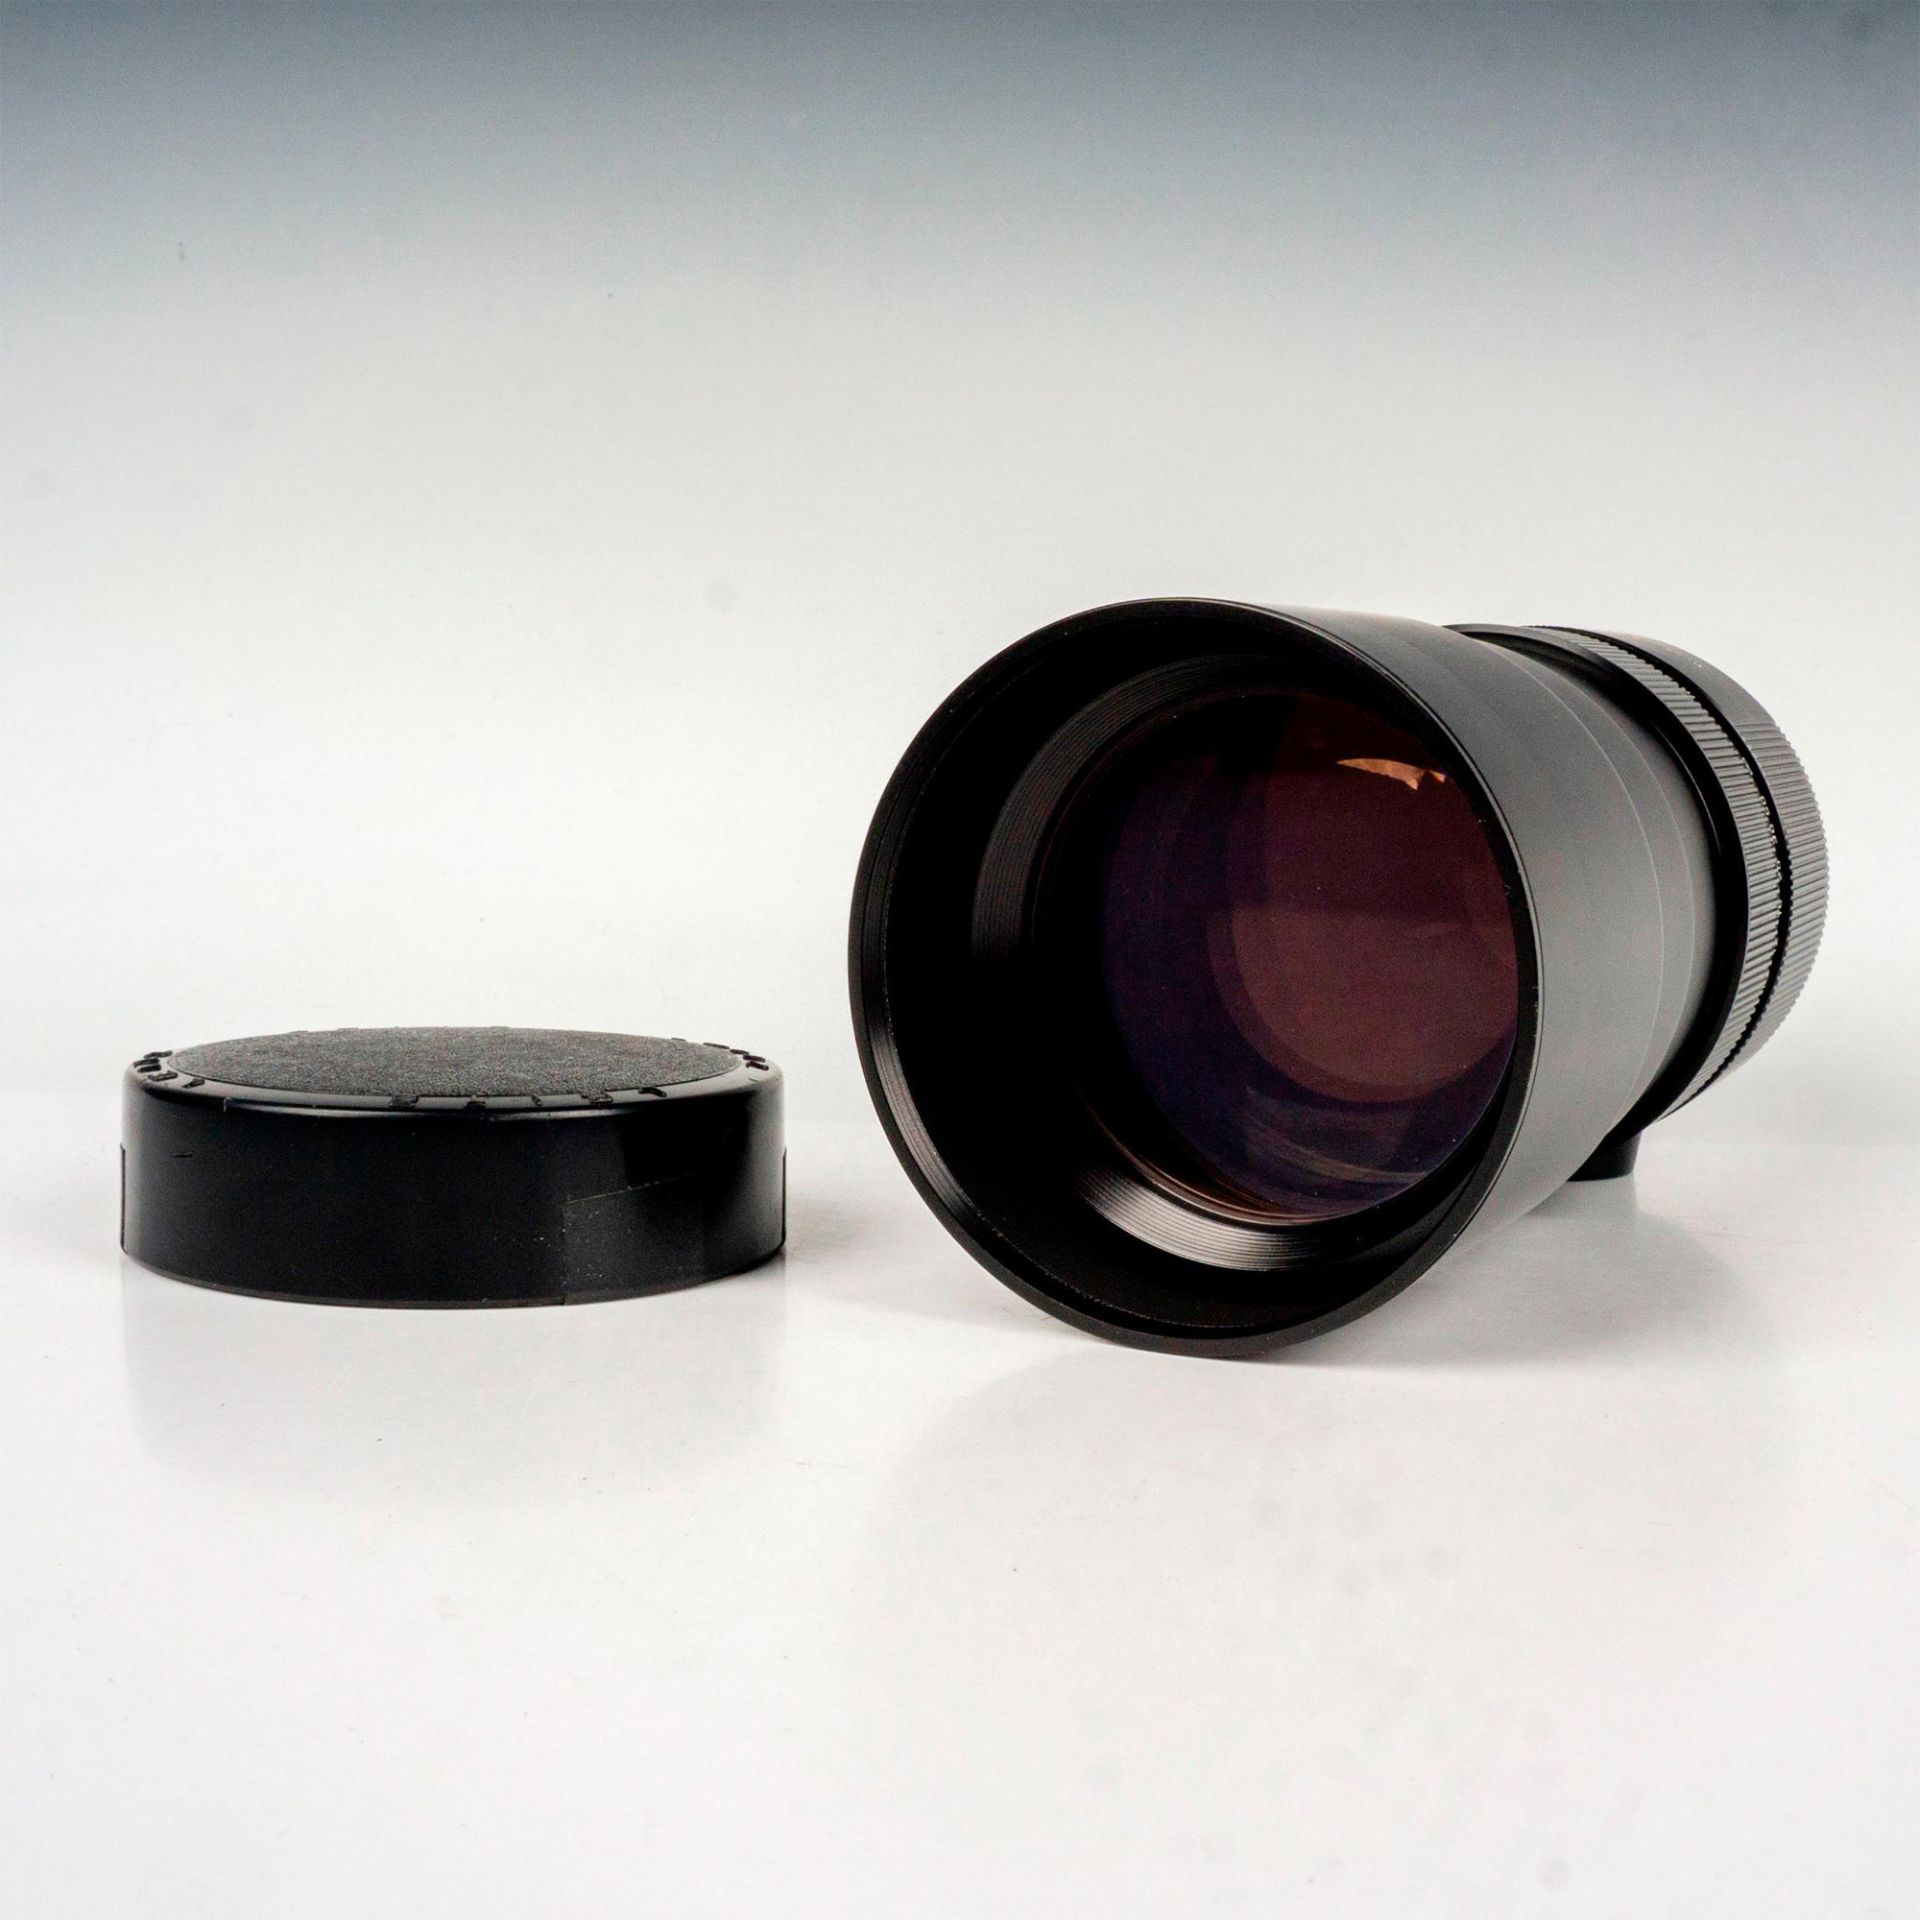 Leica Emerit Lens 180mm f/2/8- f/22 Leitz Wetzlar Germany - Image 3 of 4